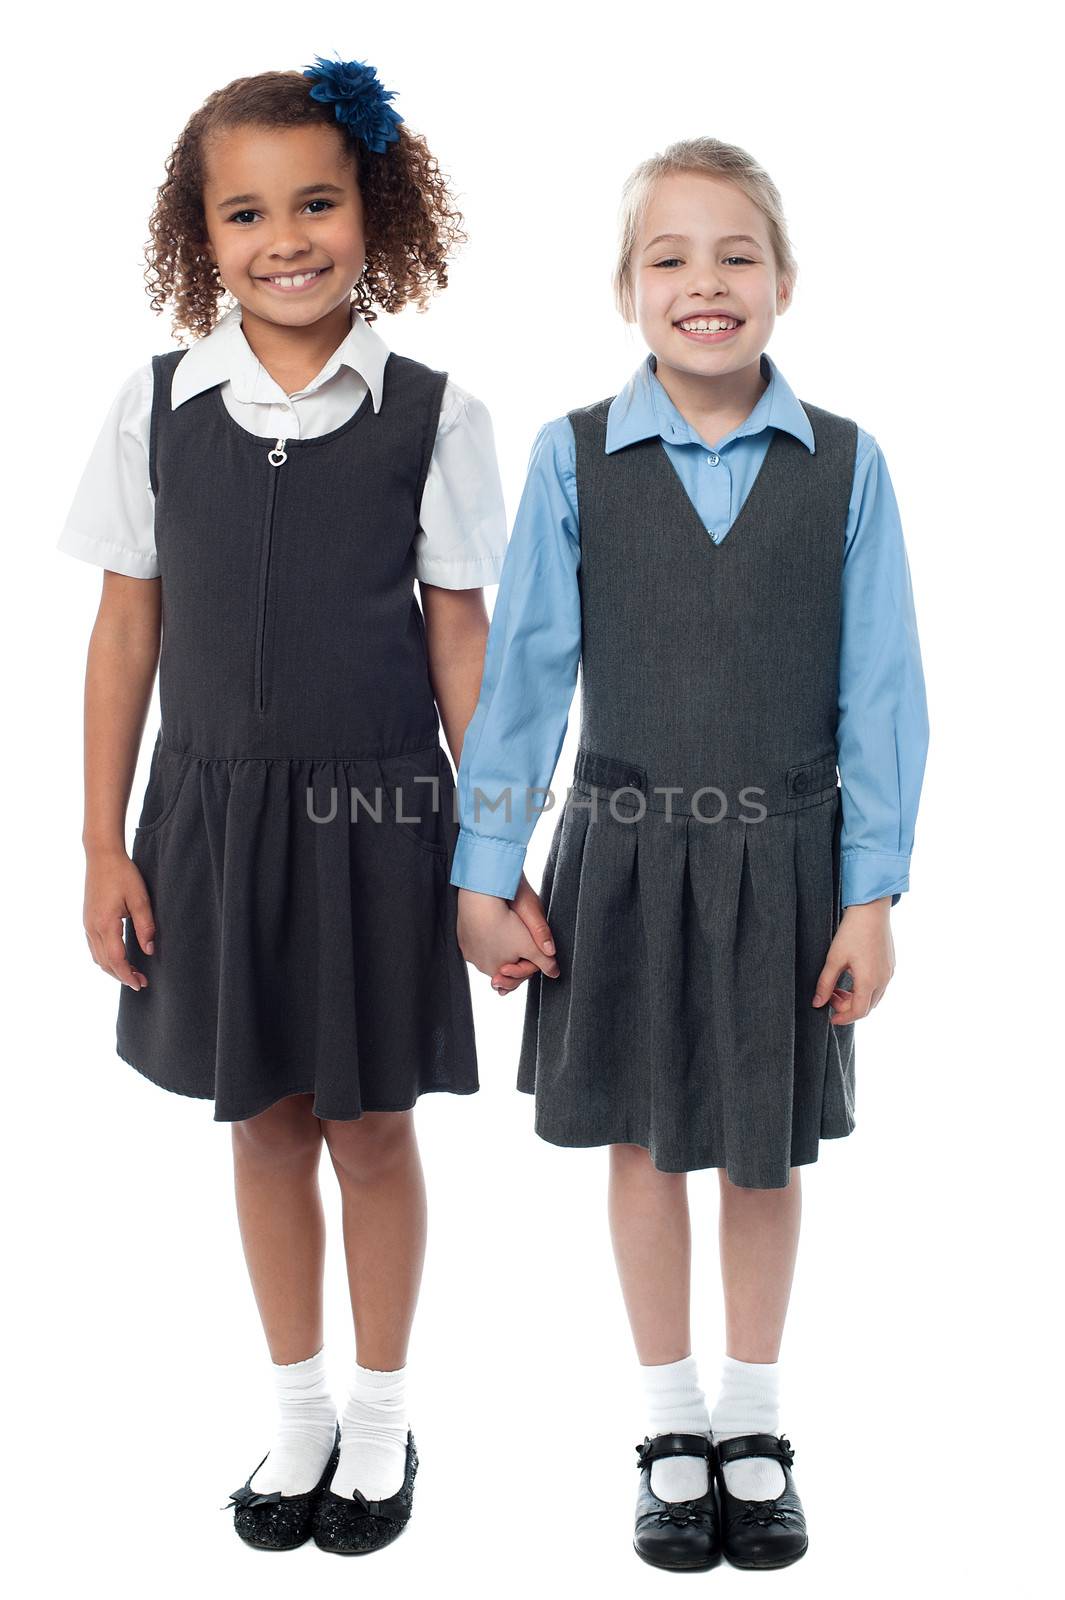 Cheerful school girls posing together